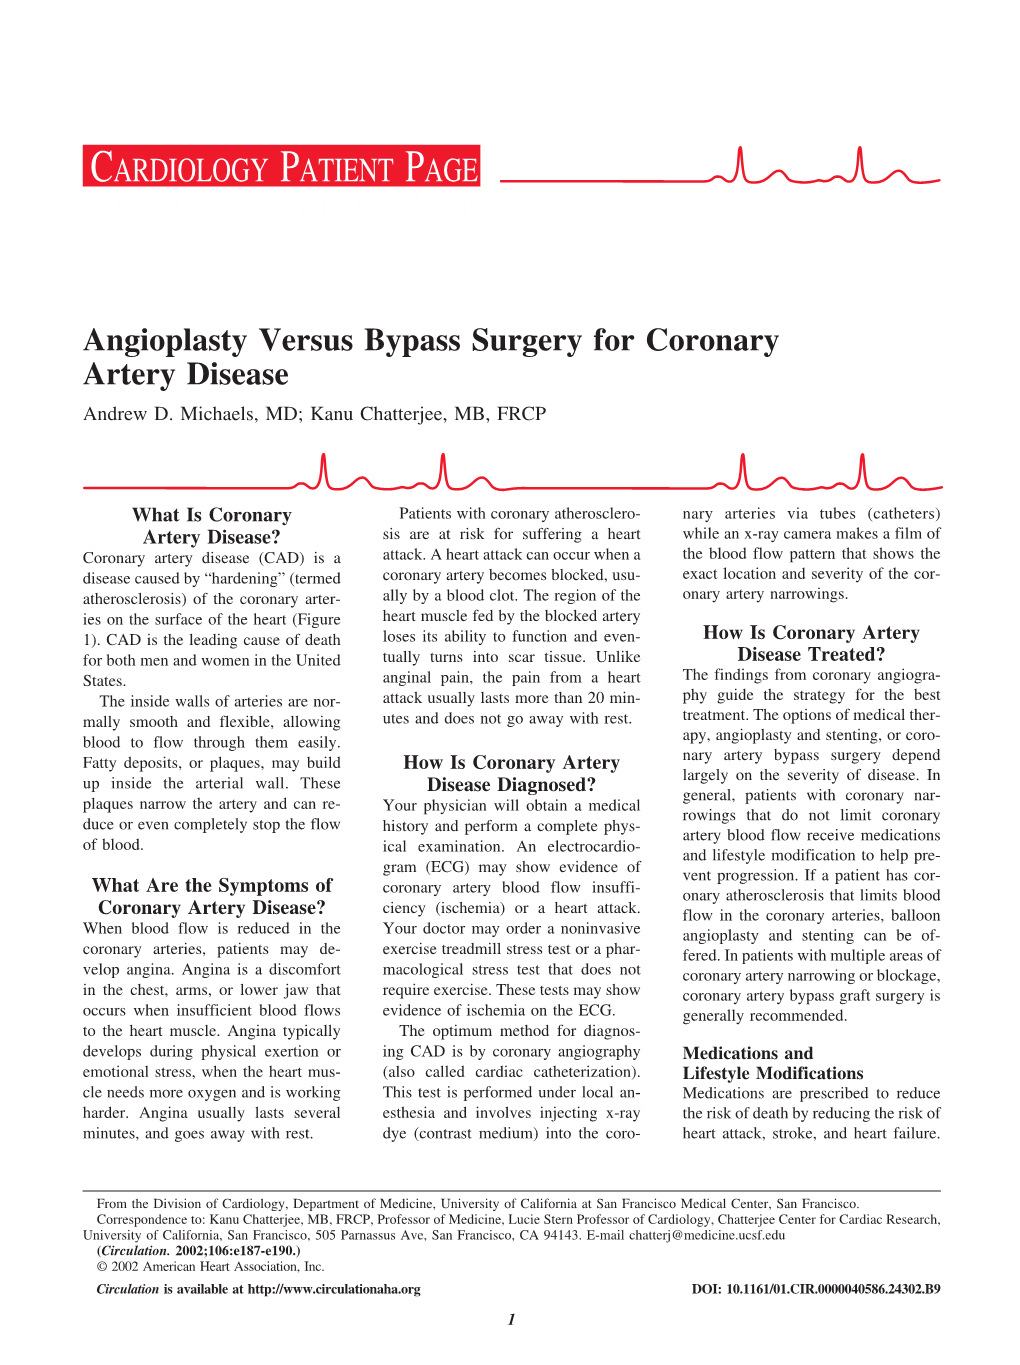 Angioplasty Versus Bypass Surgery for Coronaryartery Disease